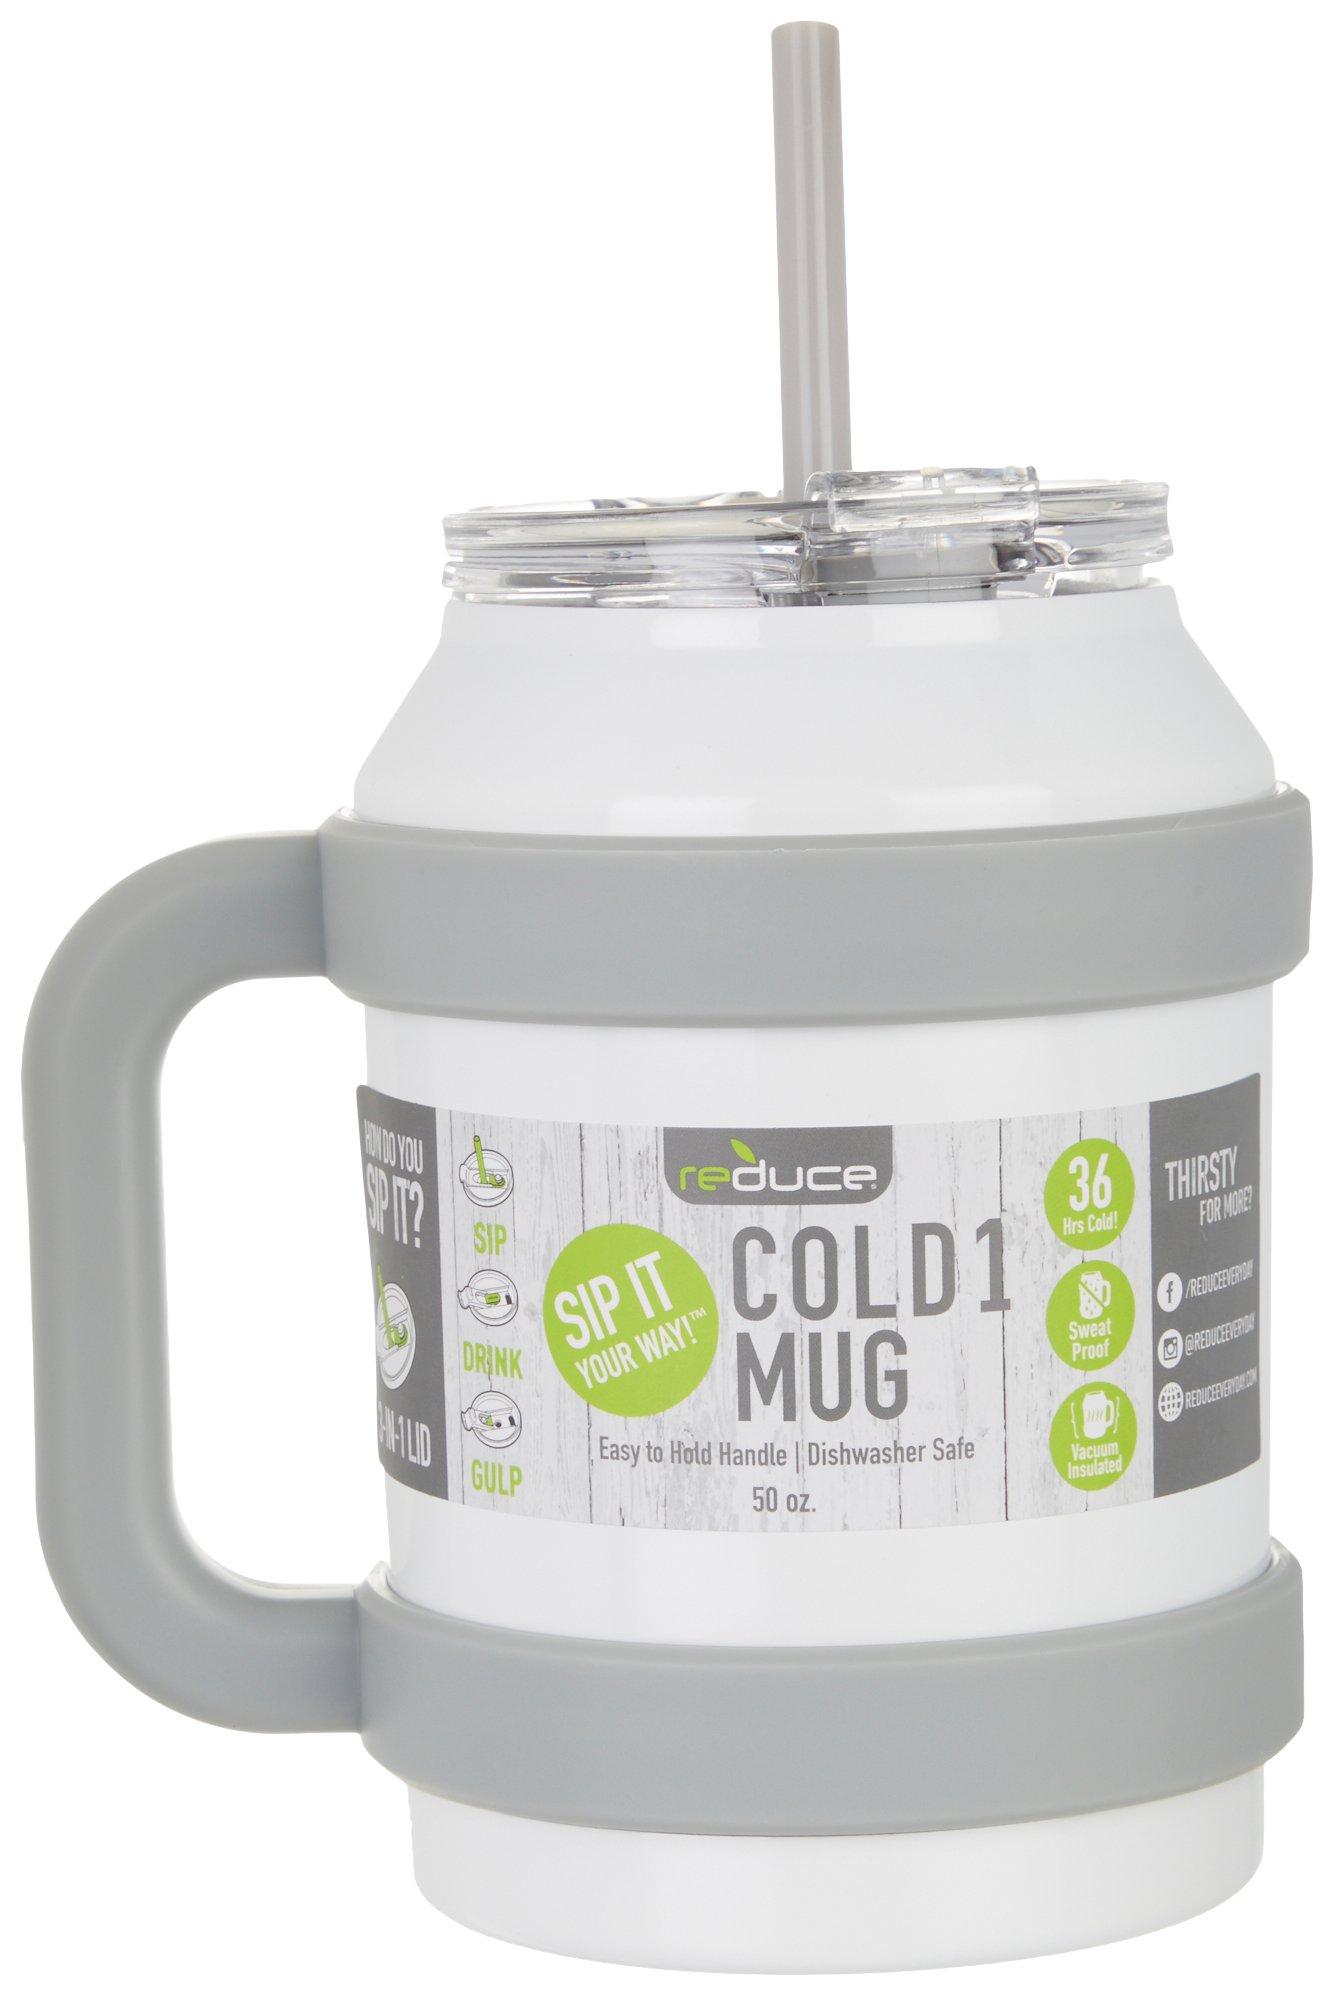 Reduce 50 oz. Cold 1 Stainless Steel Travel Mug